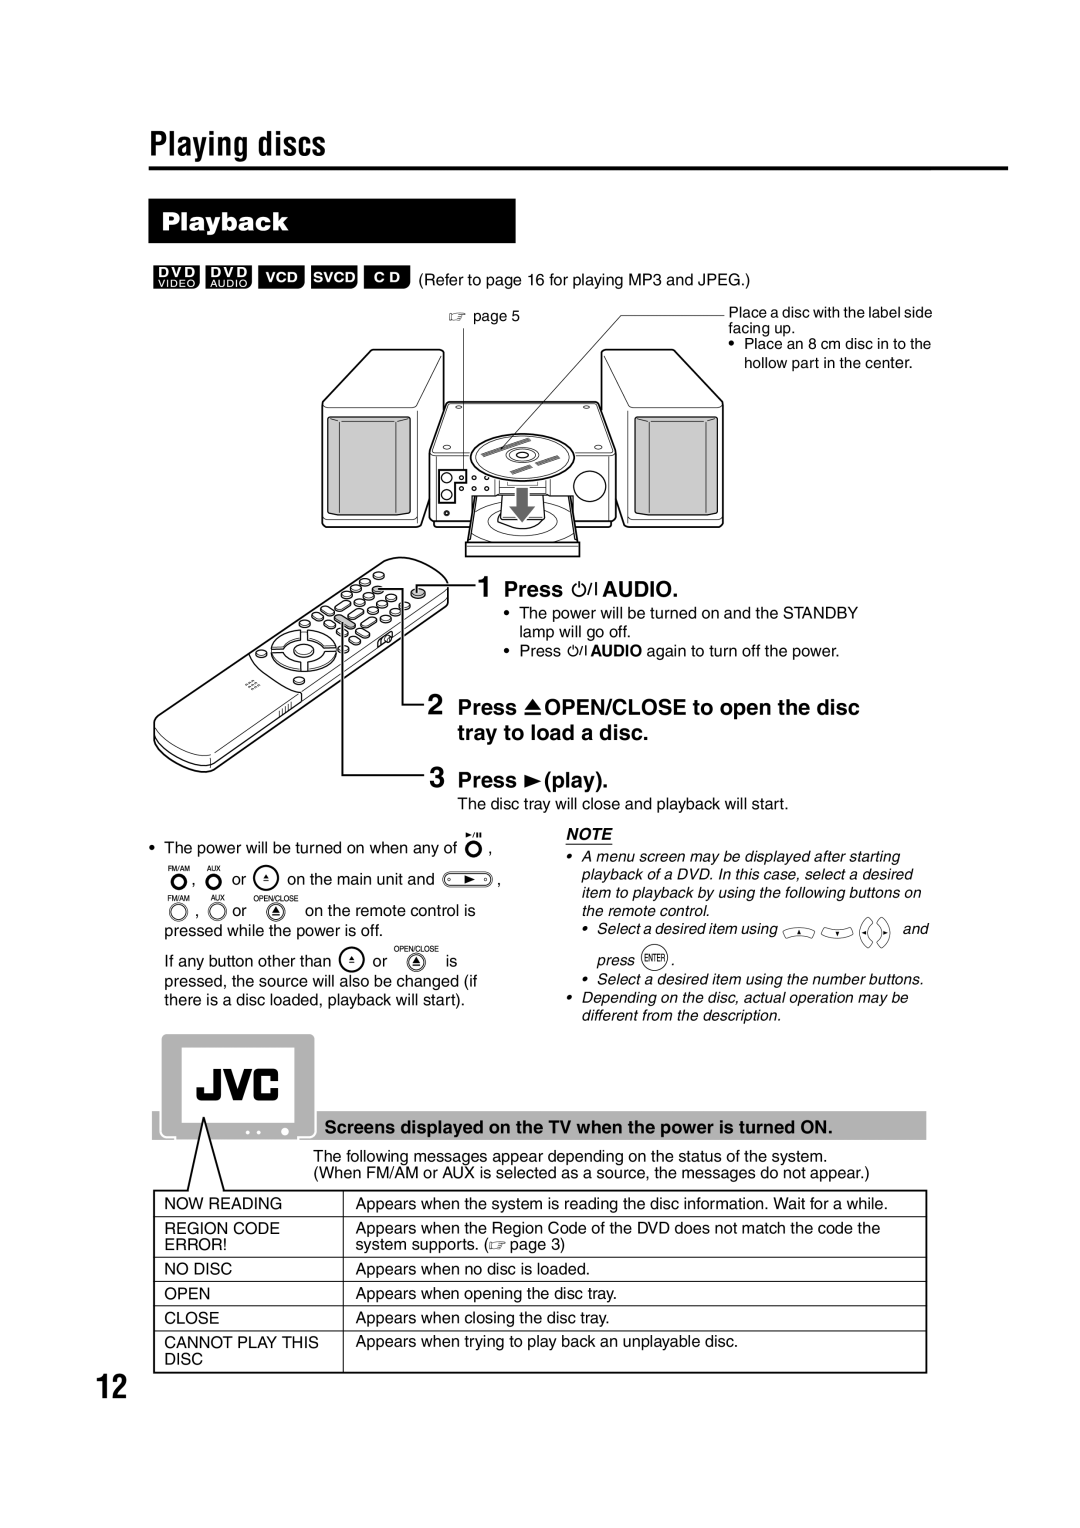 JVC LVT1284-004B manual Playing discs, Playback, Press FAUDIO, Press 3play 